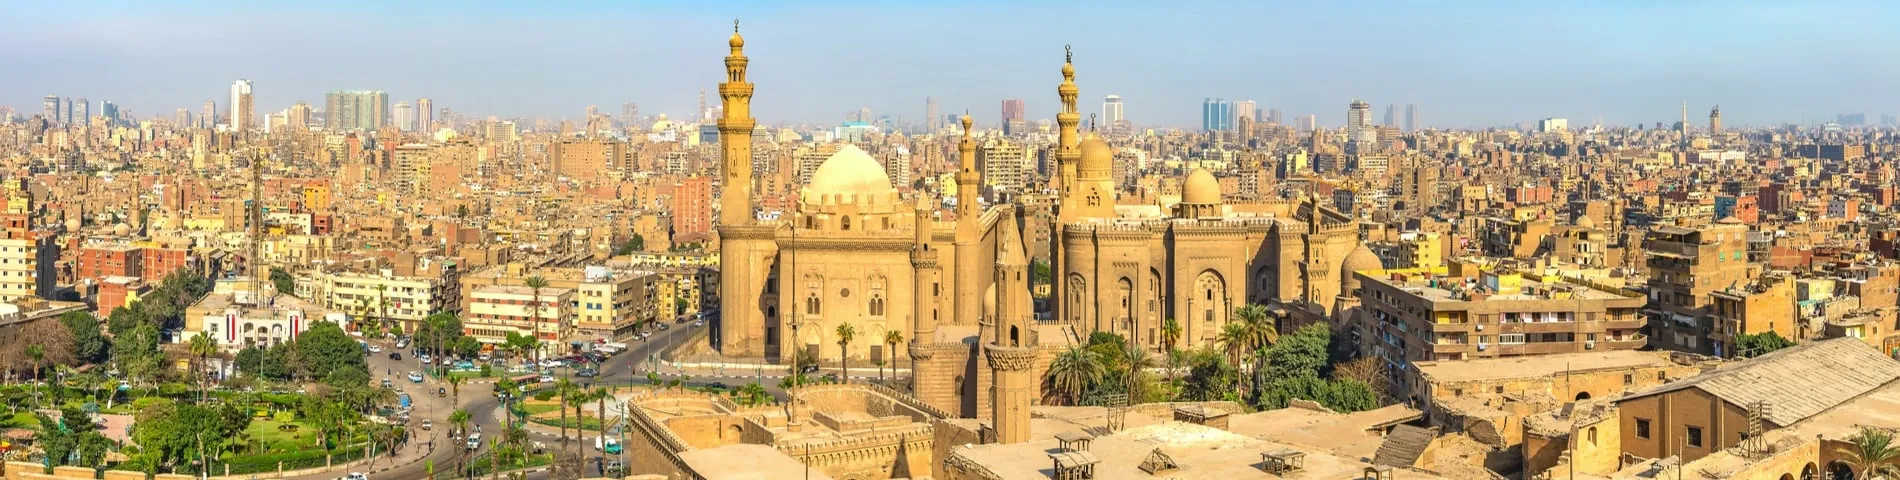 Caïro - Andere examens